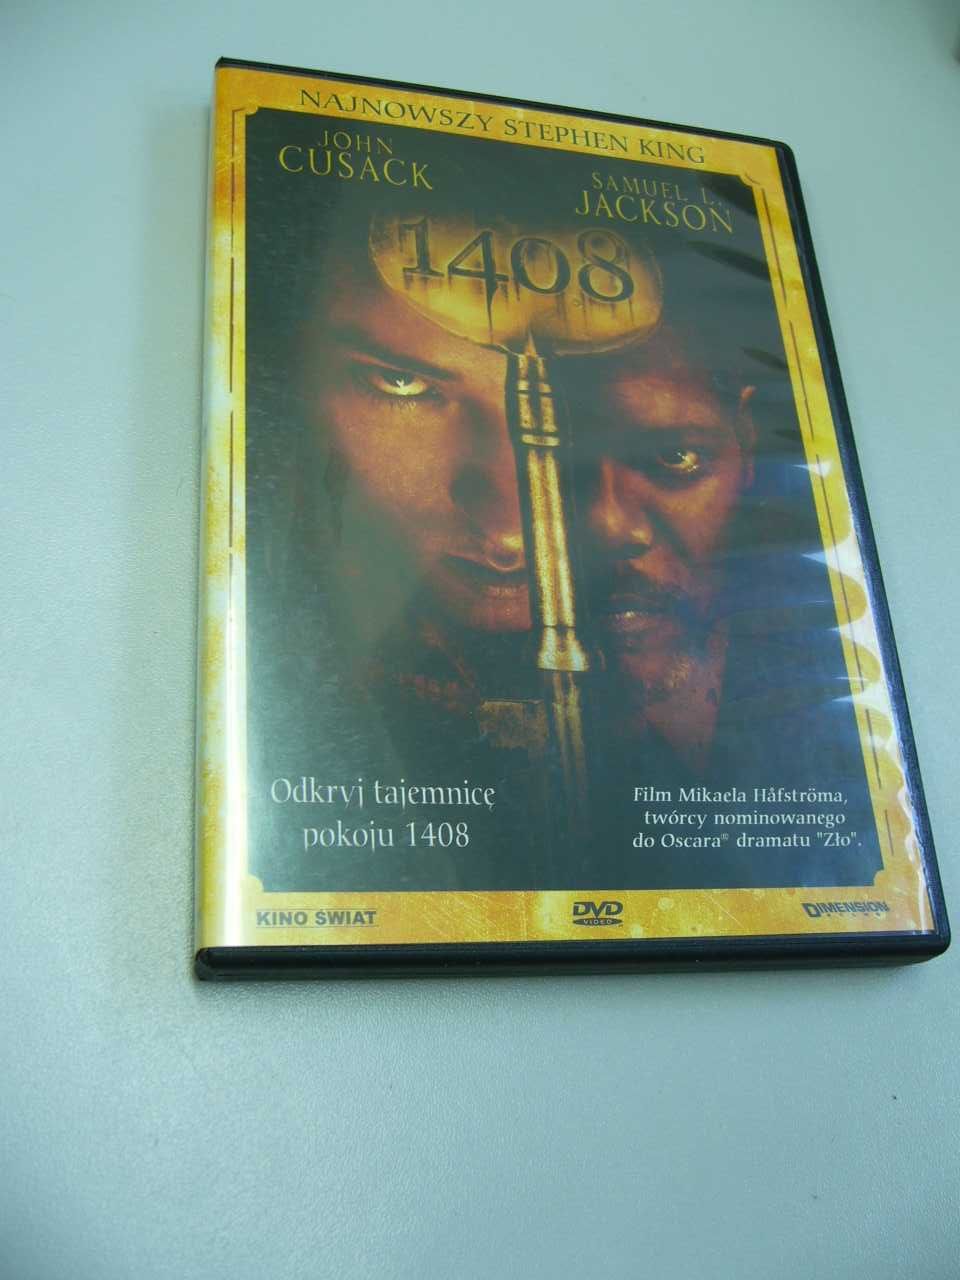 1408 film Mikaela Hafstroma